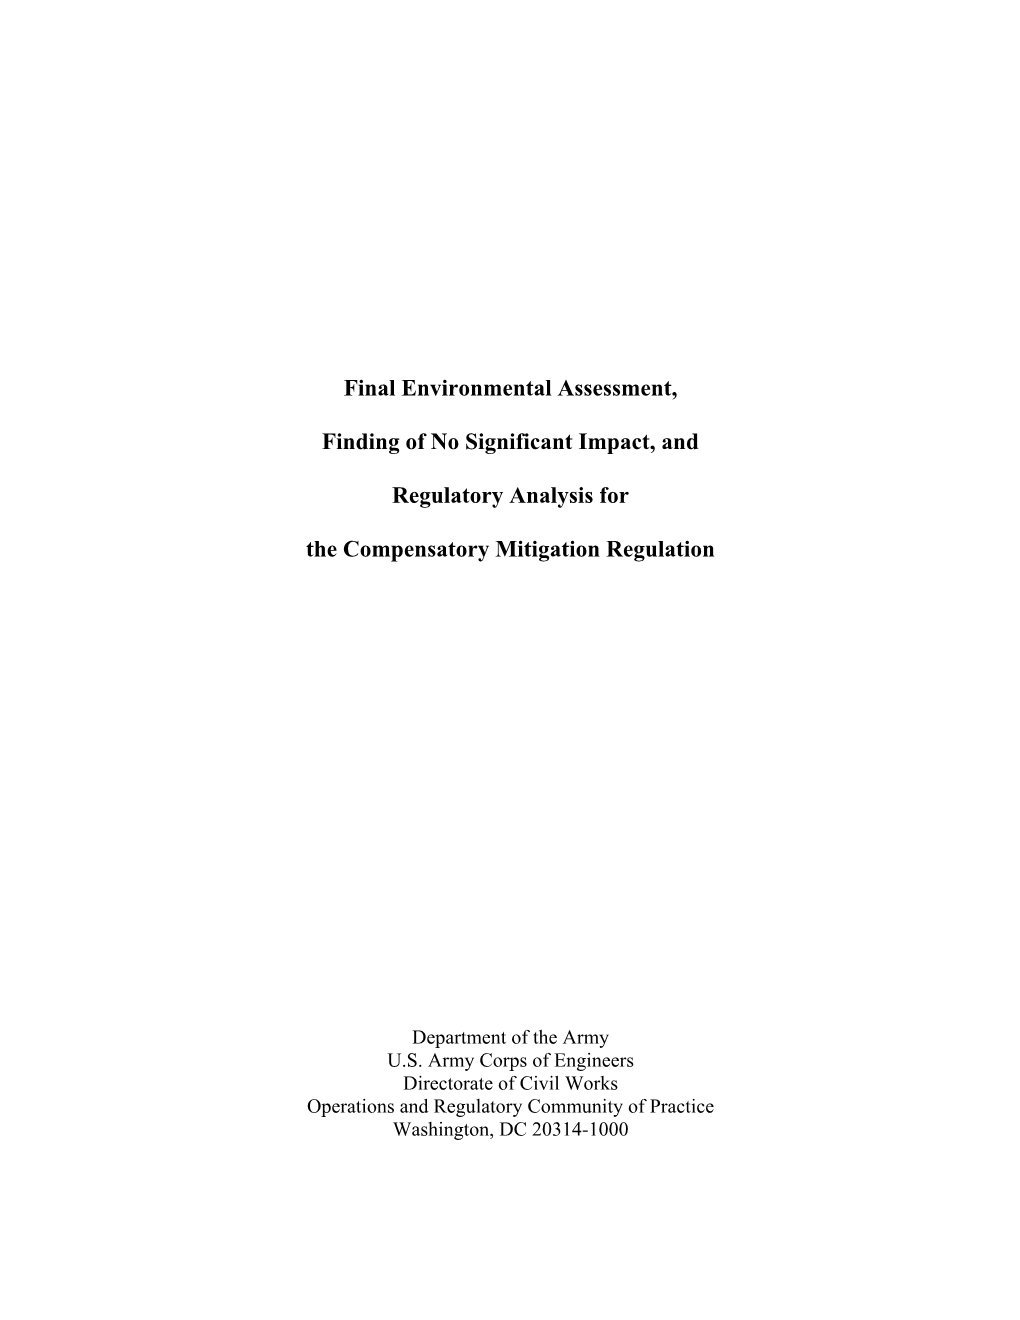 Compensatory Mitigation Rule Final Environmental Assessment (PDF)